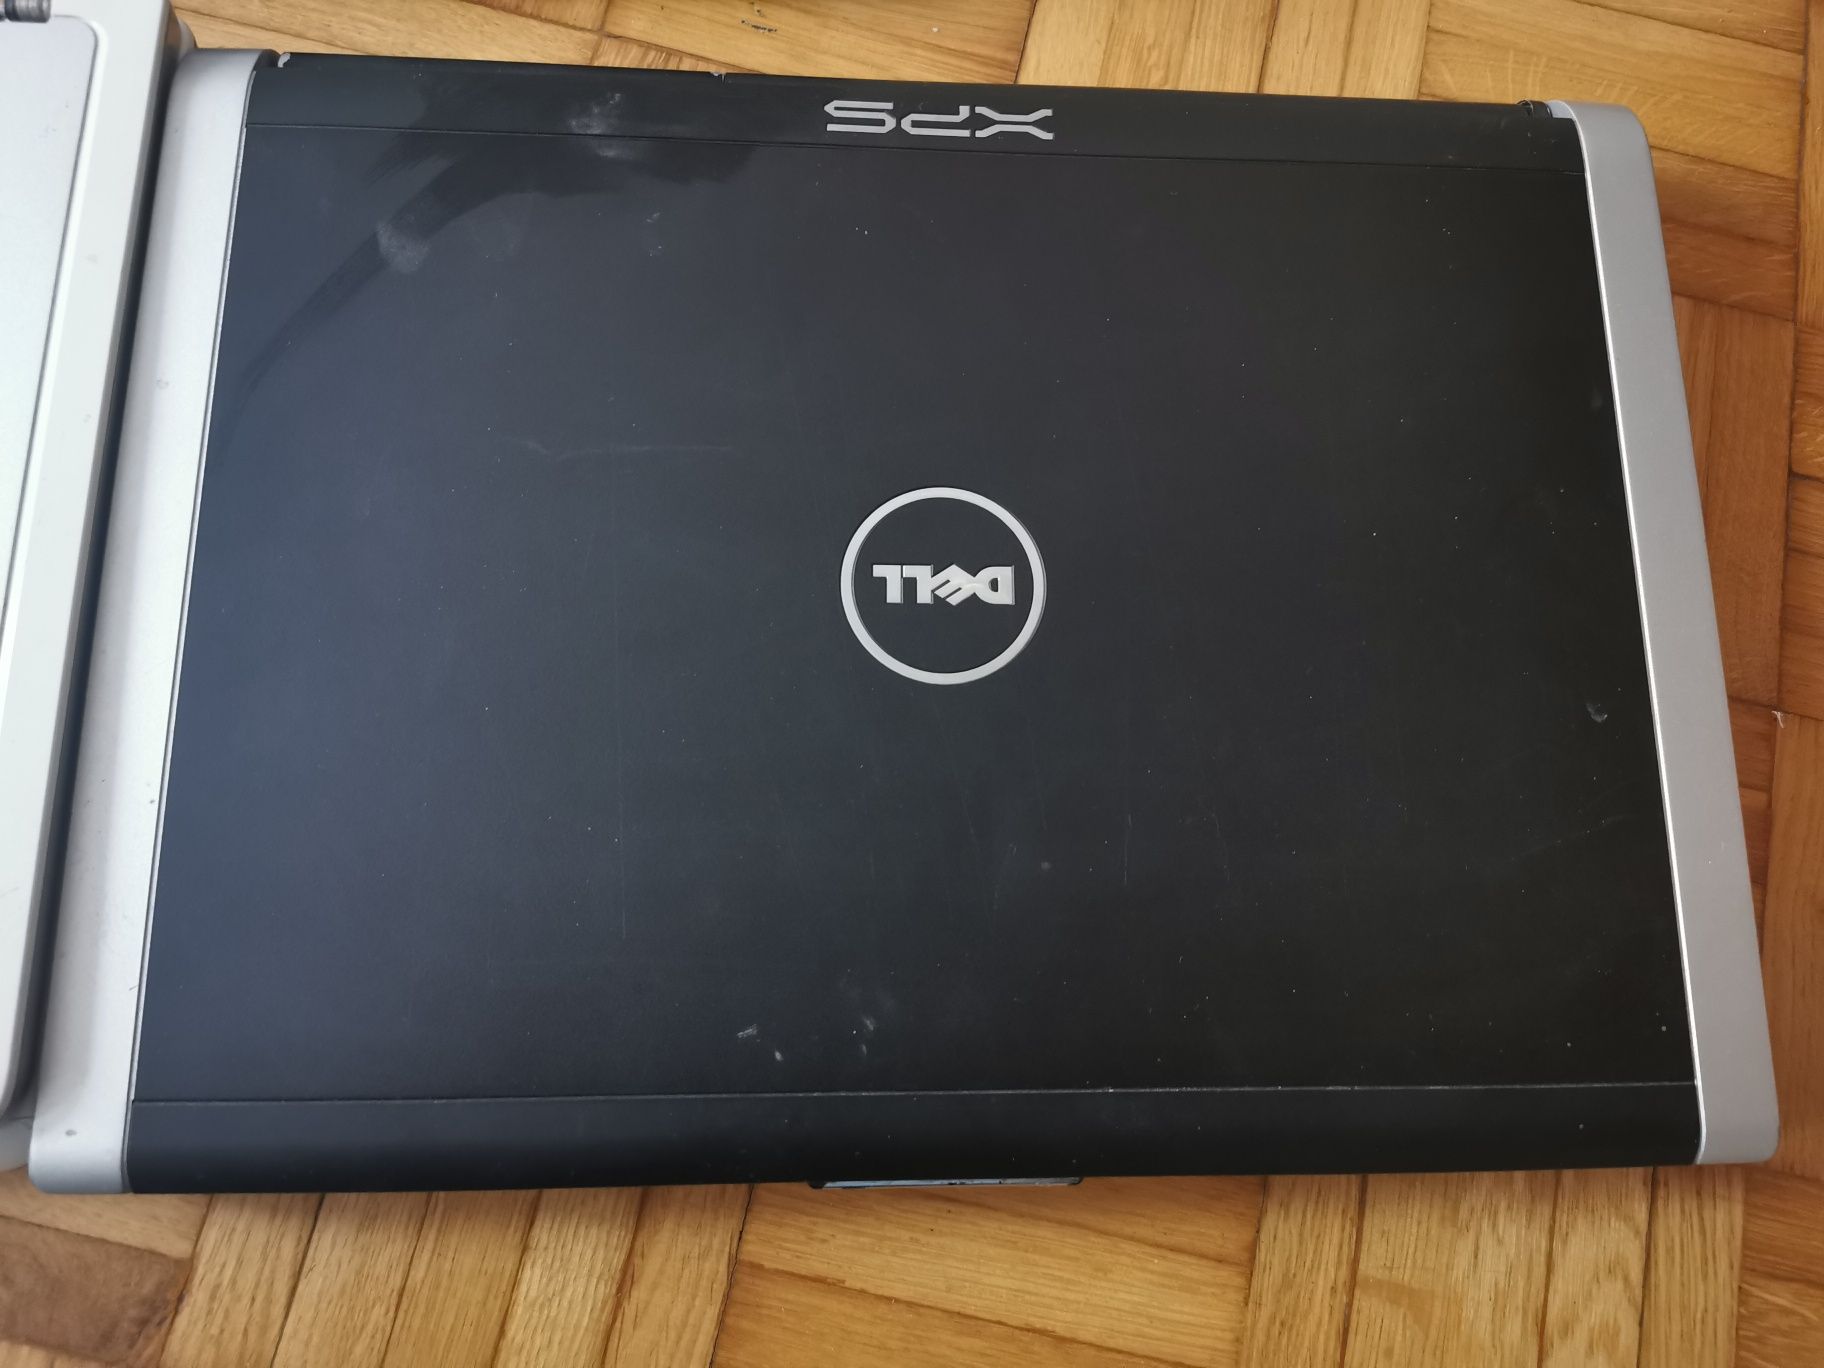 Laptop Dell Inspiron 6400, XPS m 1530 komputer